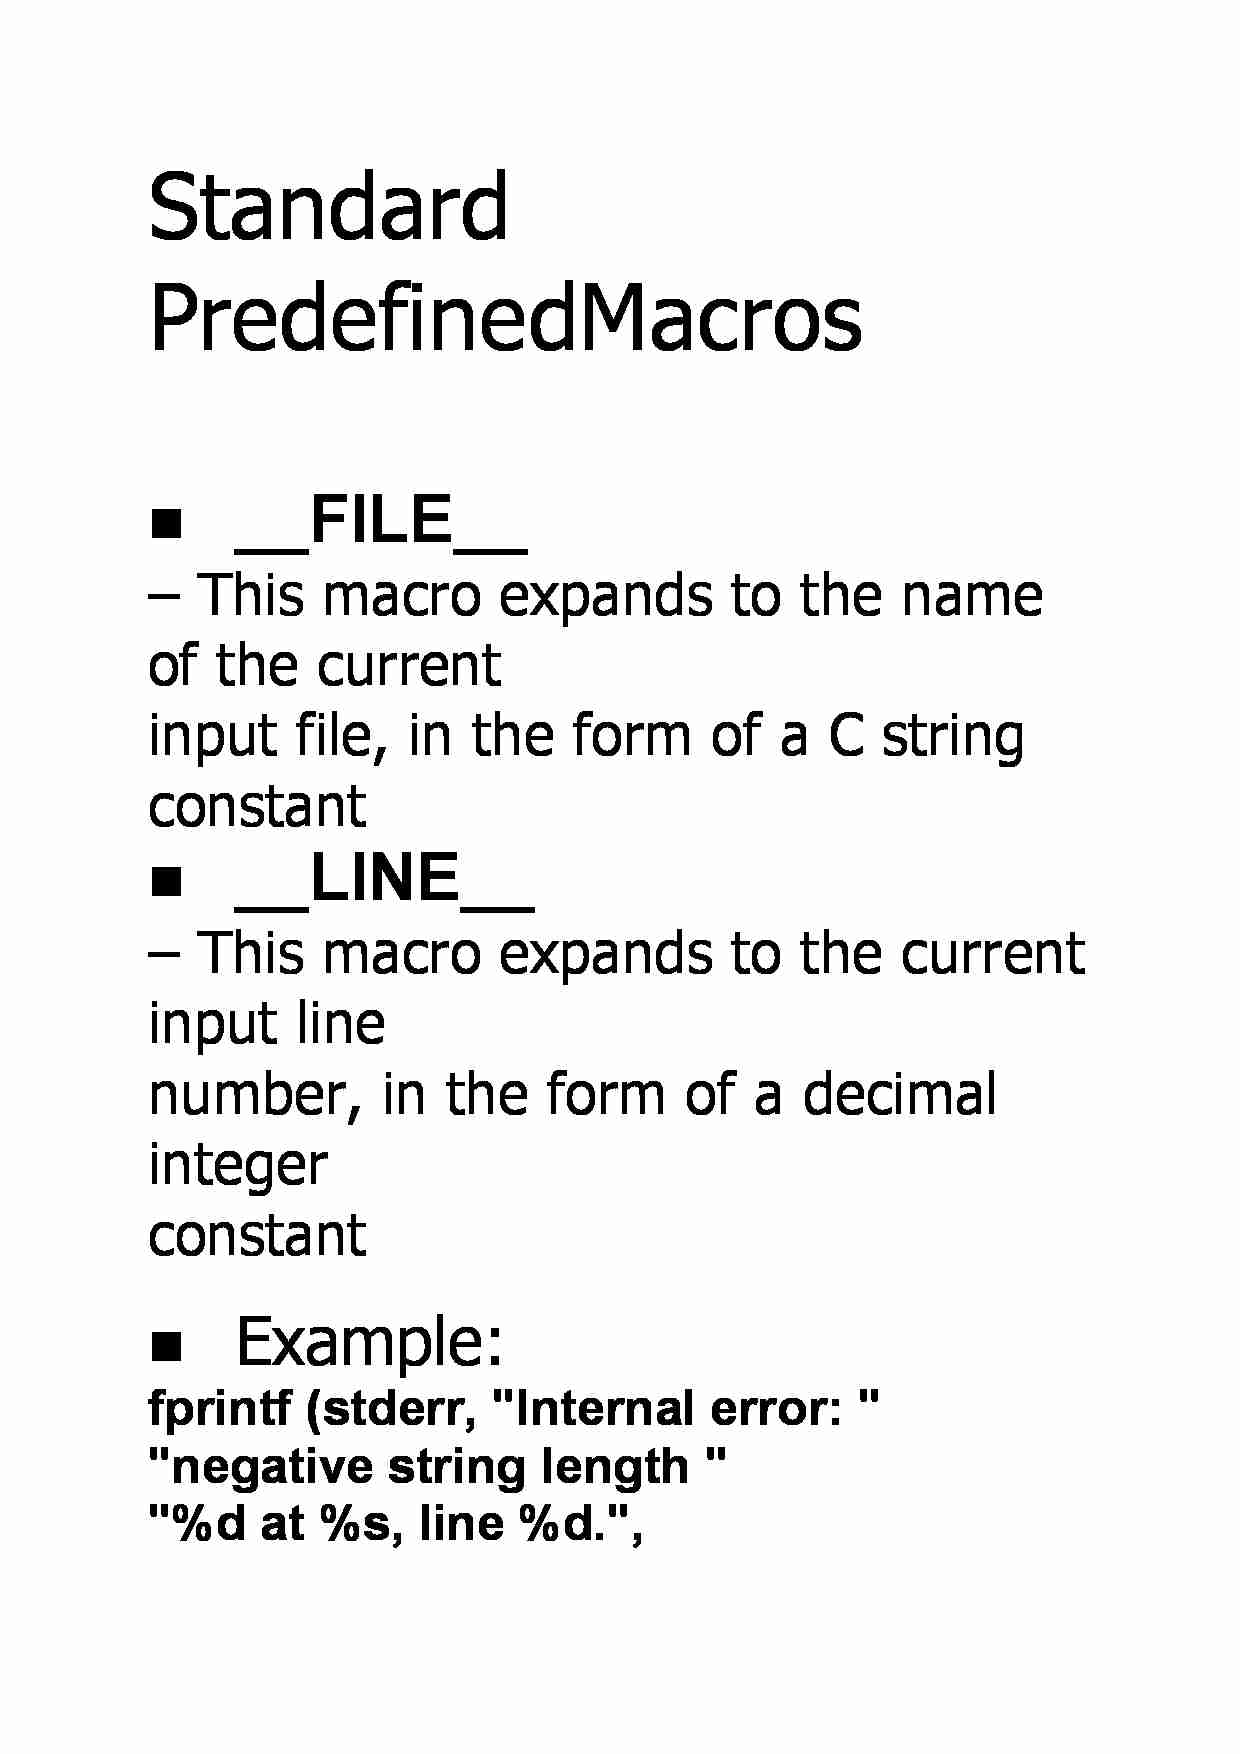 Standard Predefined Macros - strona 1